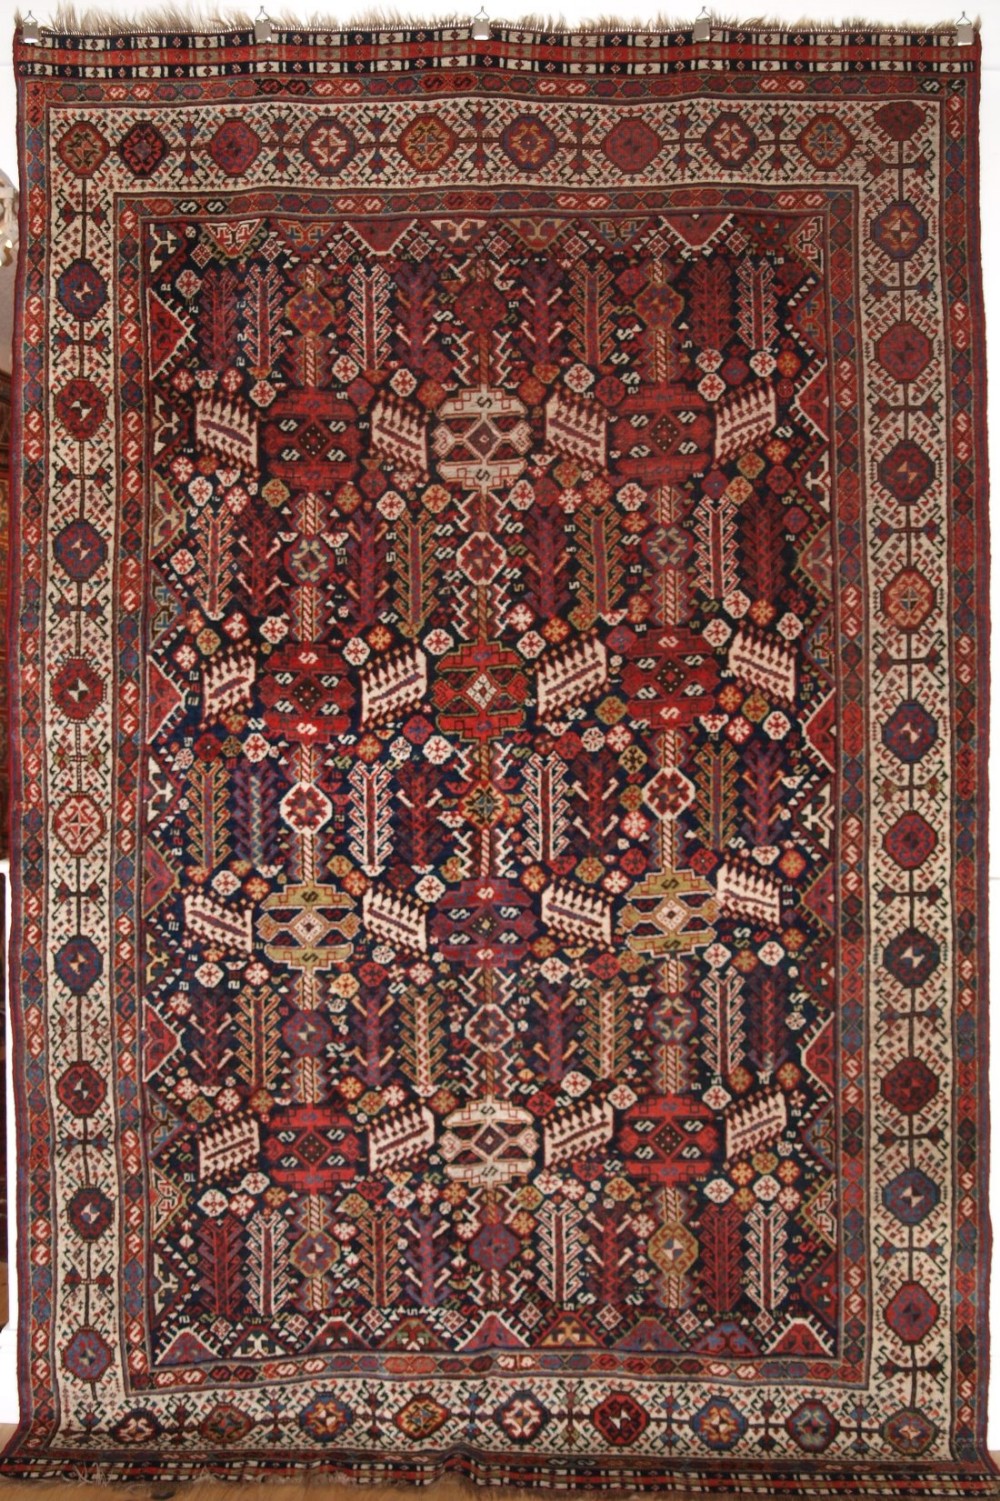 antique shekarlu qashqai rug classic design excellent condition circa 1900